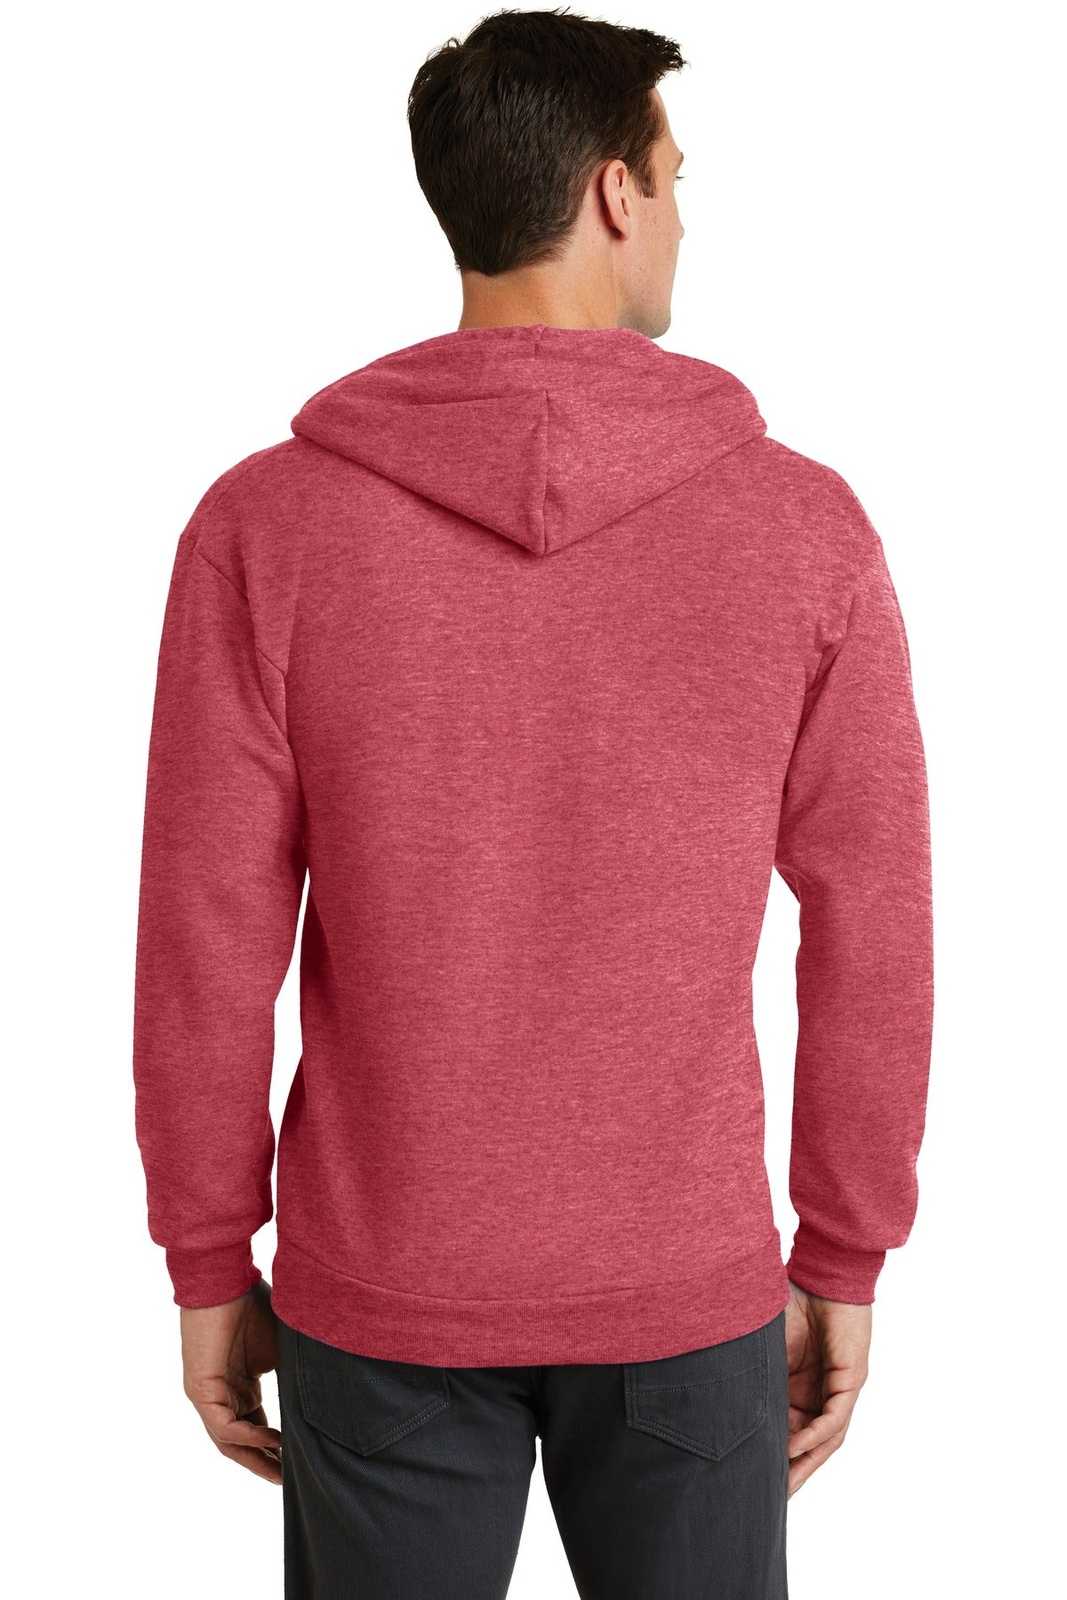 Port &amp; Company PC78ZH Core Fleece Full-Zip Hooded Sweatshirt - Heather Red - HIT a Double - 2